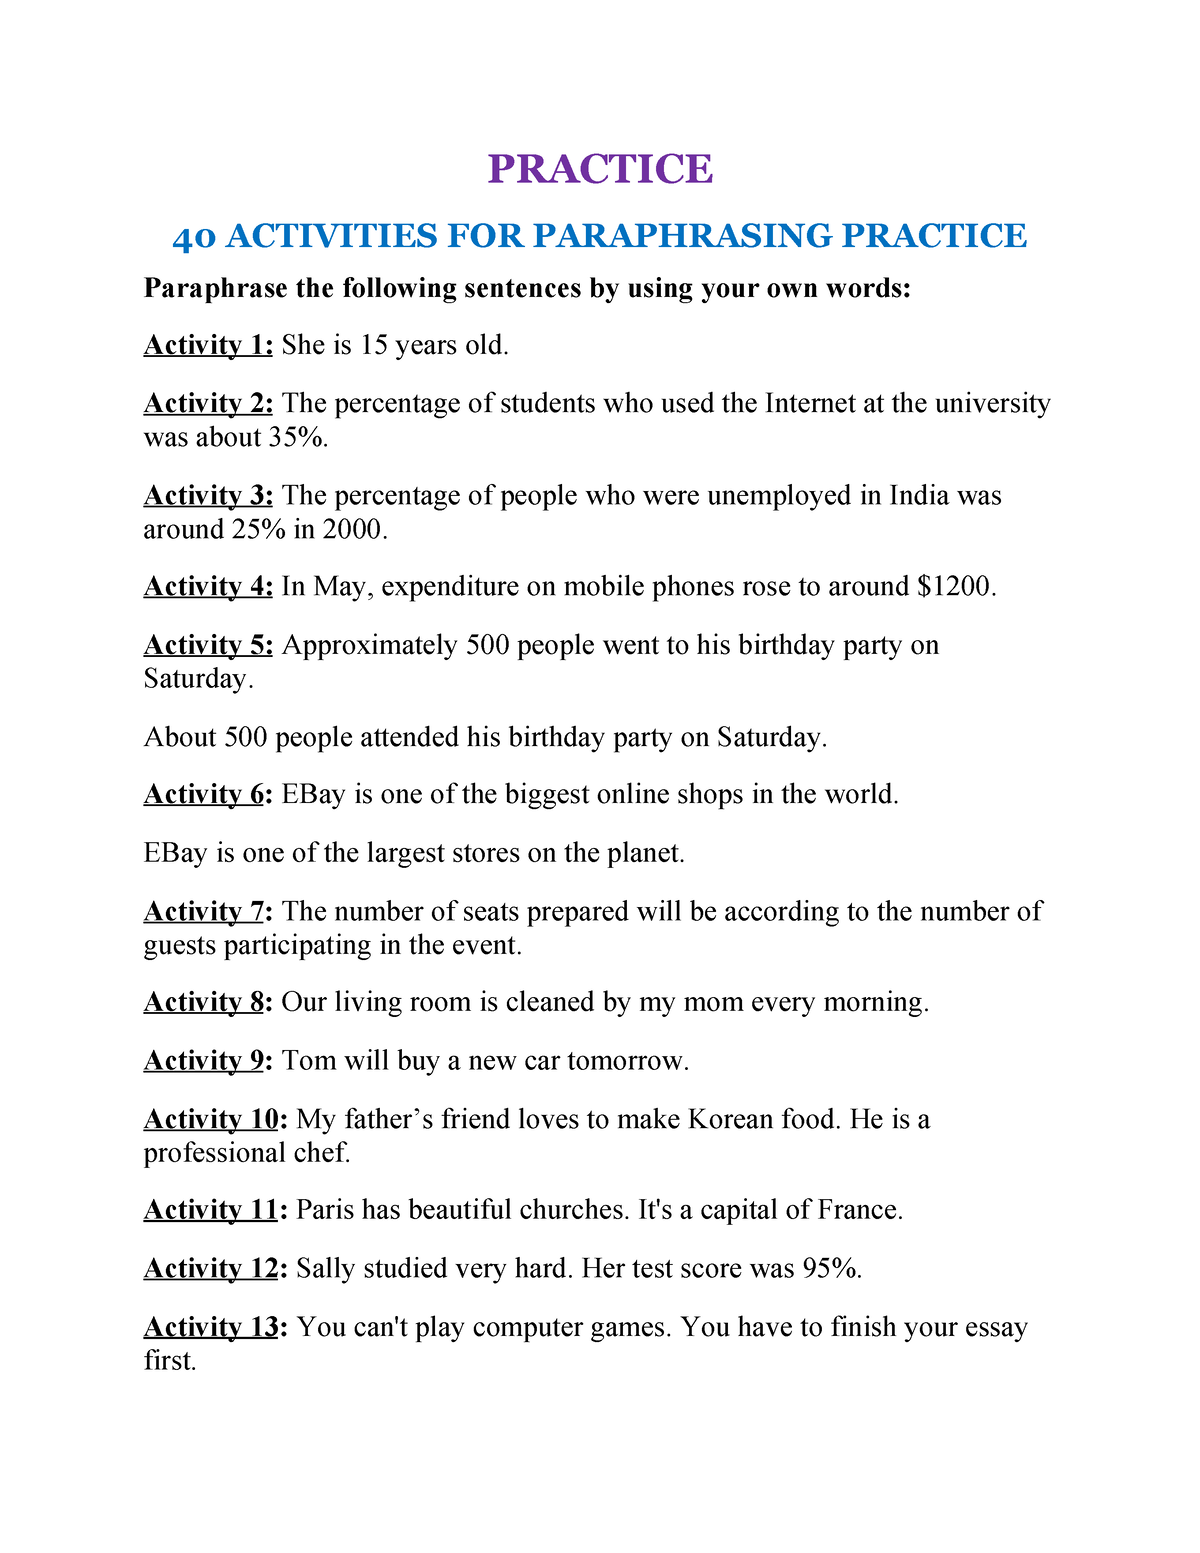 paraphrasing-activity-practice-40-activities-for-paraphrasing